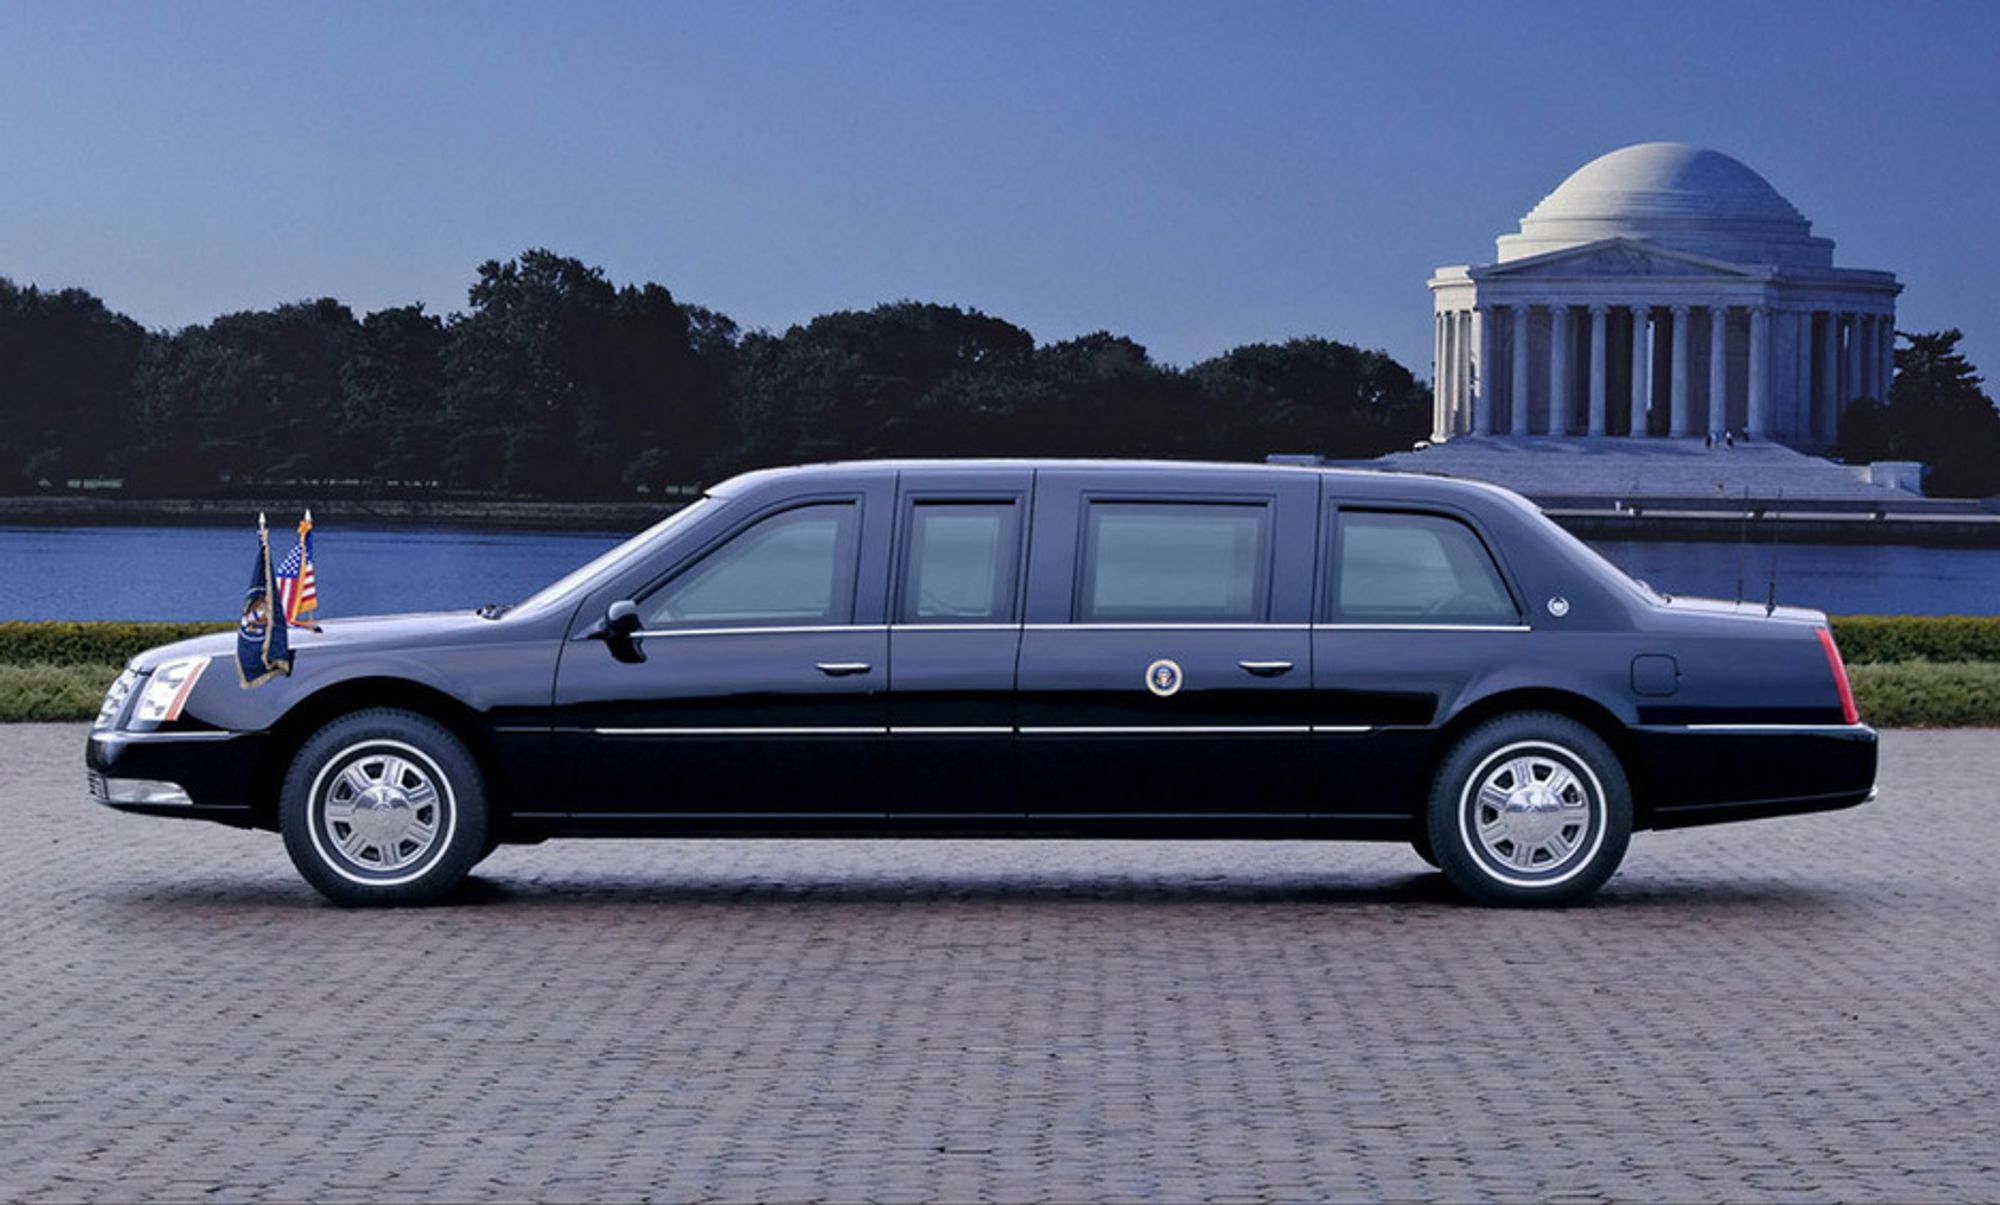 Obamas super-Cadillac